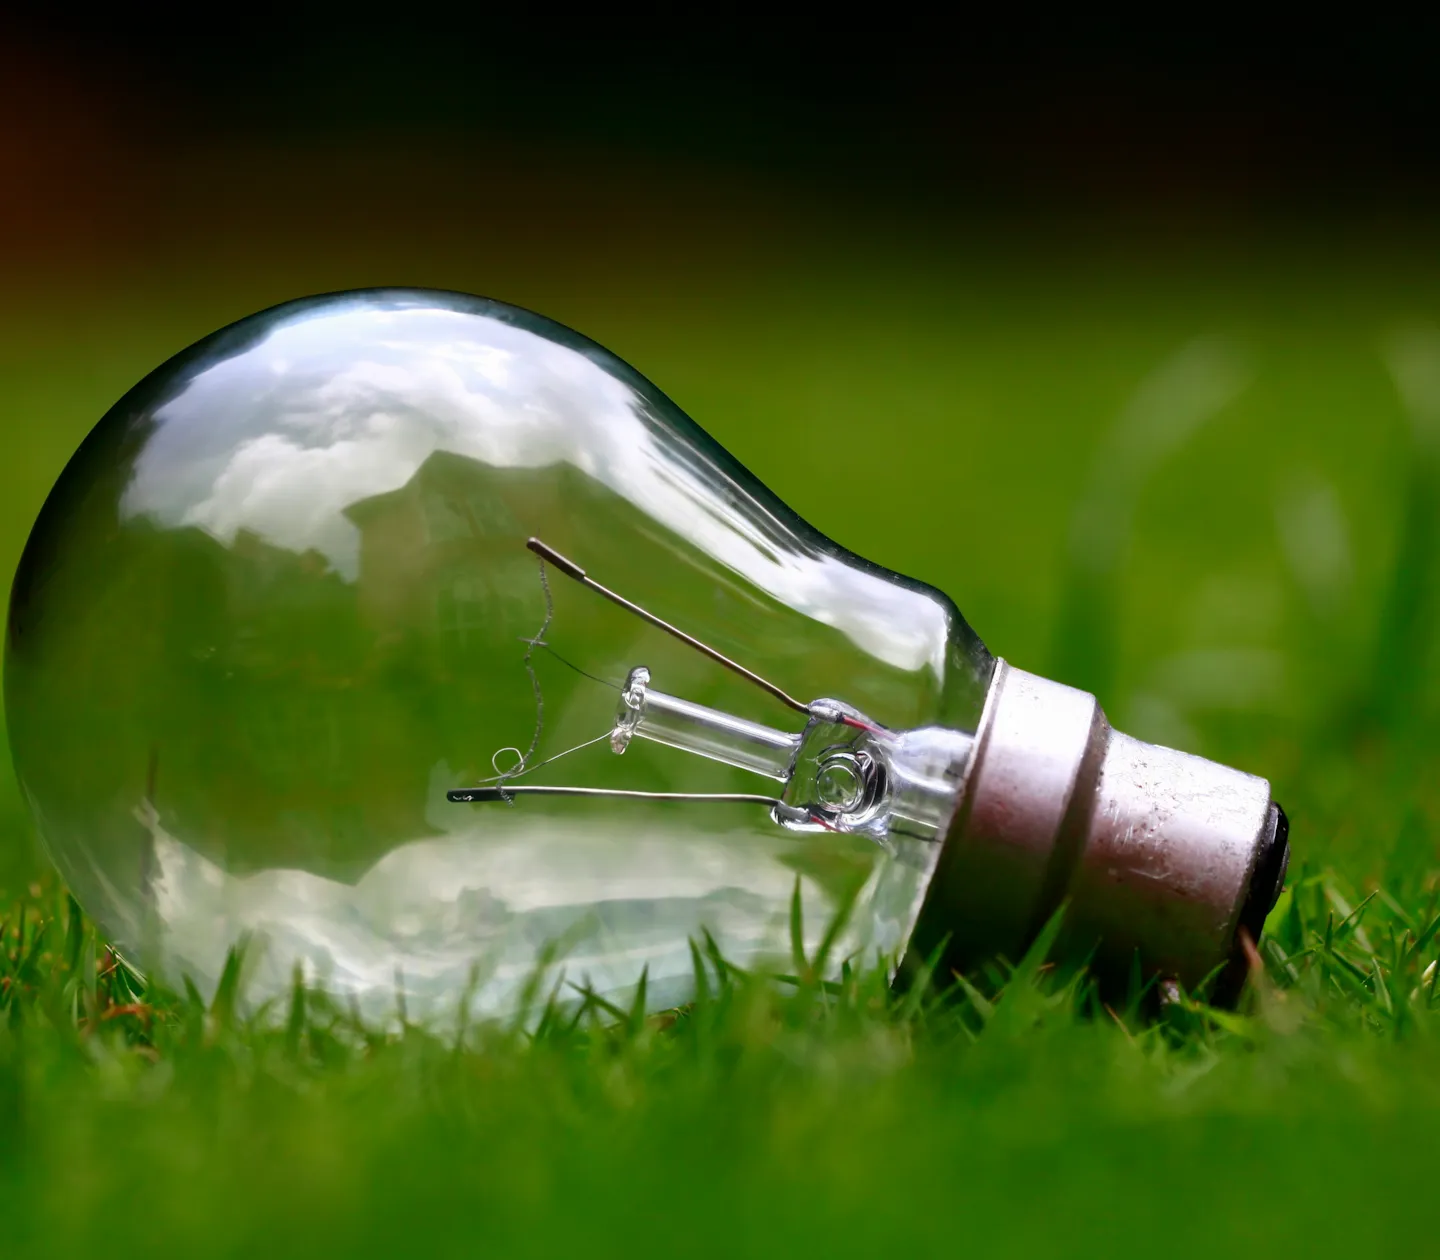 A light bulb lying on a lawn